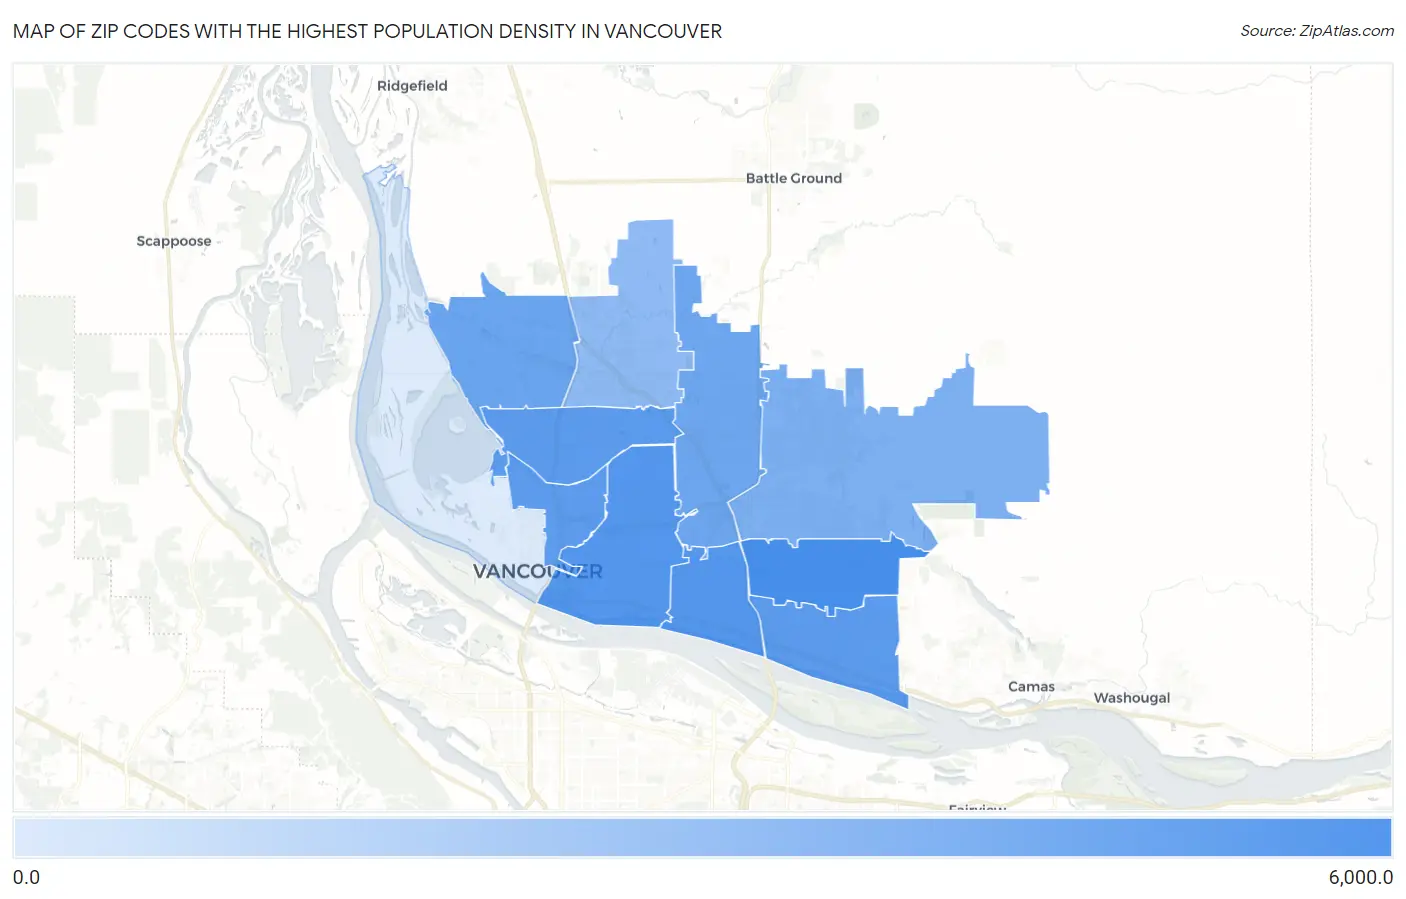 Highest Population Density in Vancouver by Zip Code